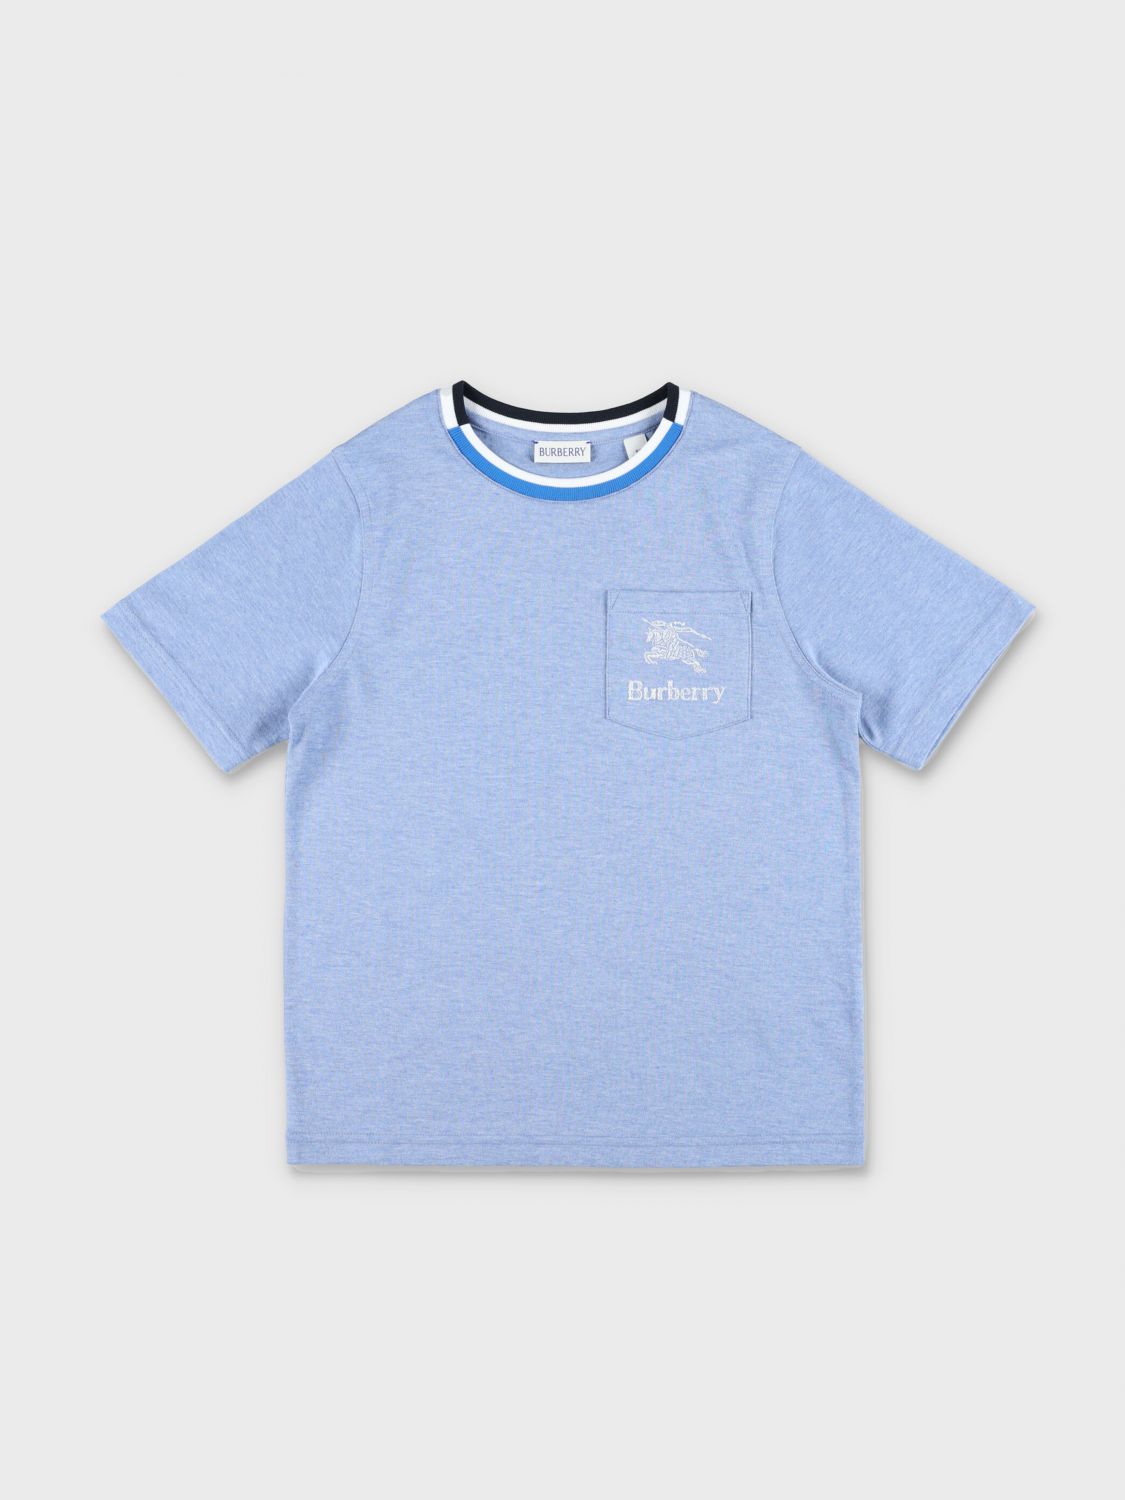 Burberry T-shirt  Kids Kids Color Blue